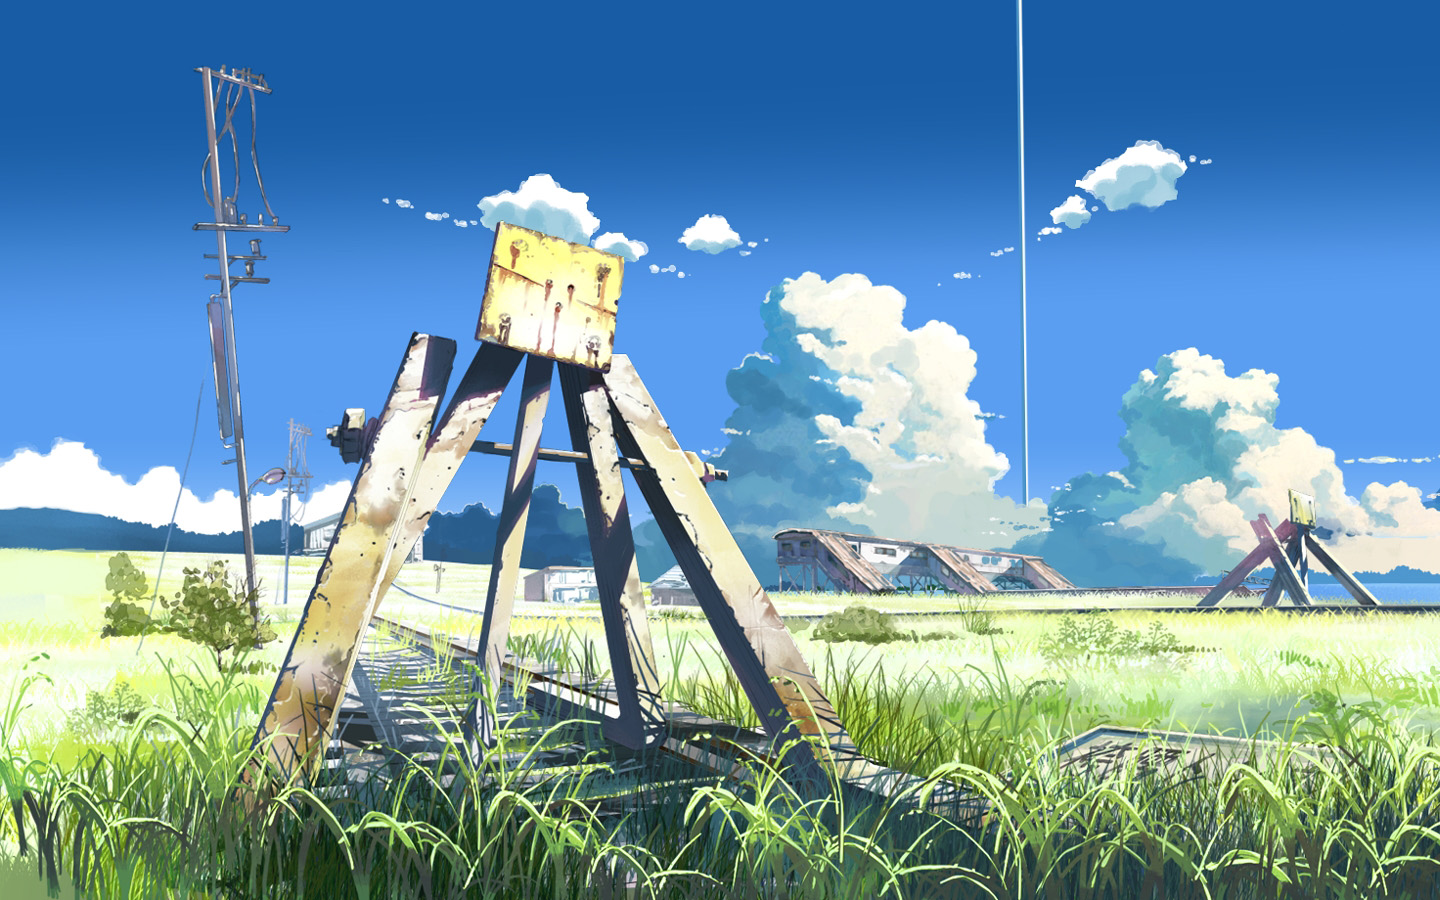 Beautiful Anime Scenery Backgrounds - 1440x900 Wallpaper 